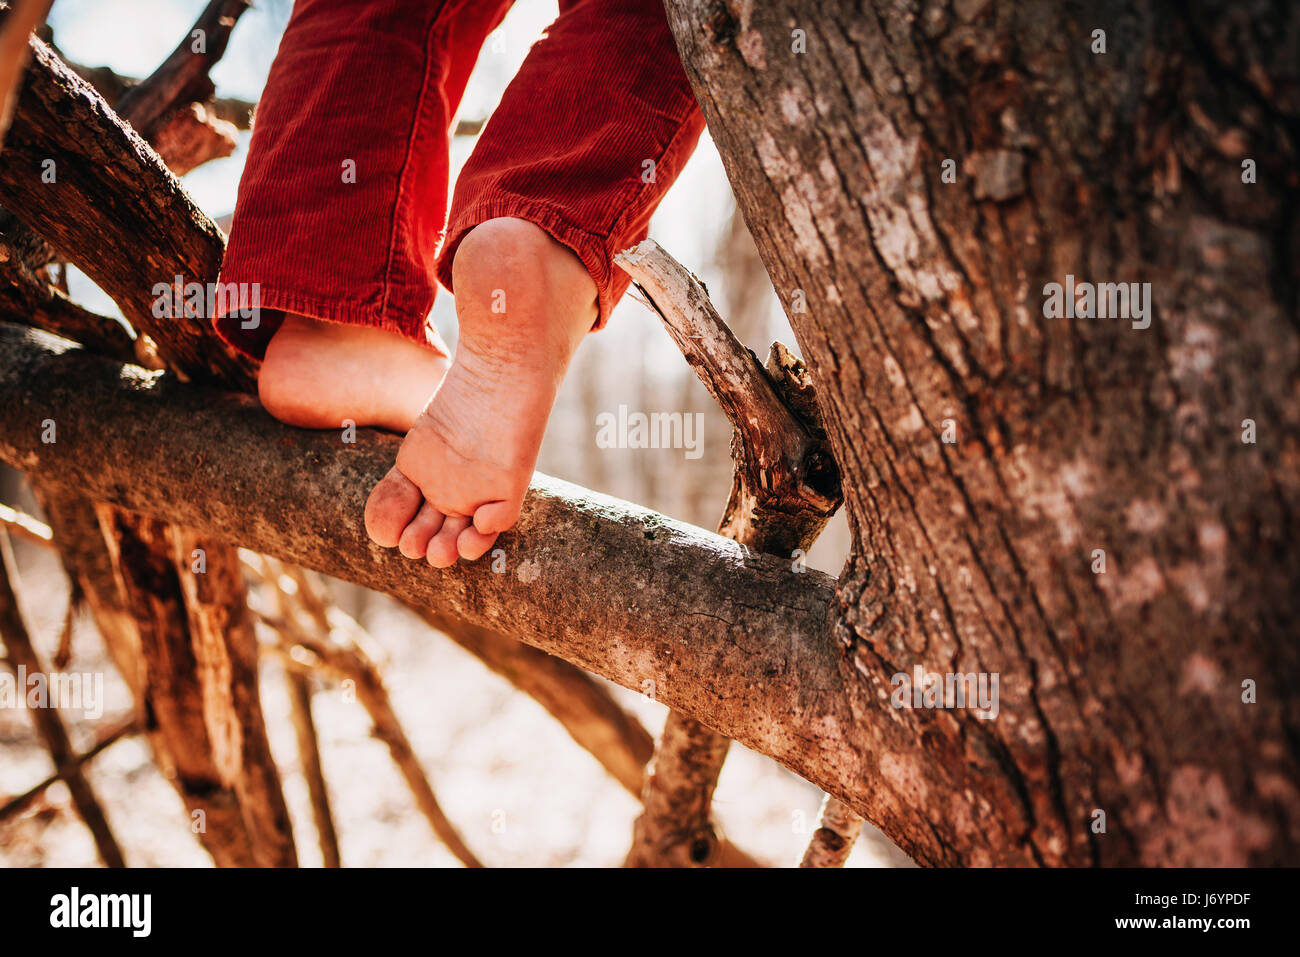 Boy climbing a tree barefoot Stock Photo